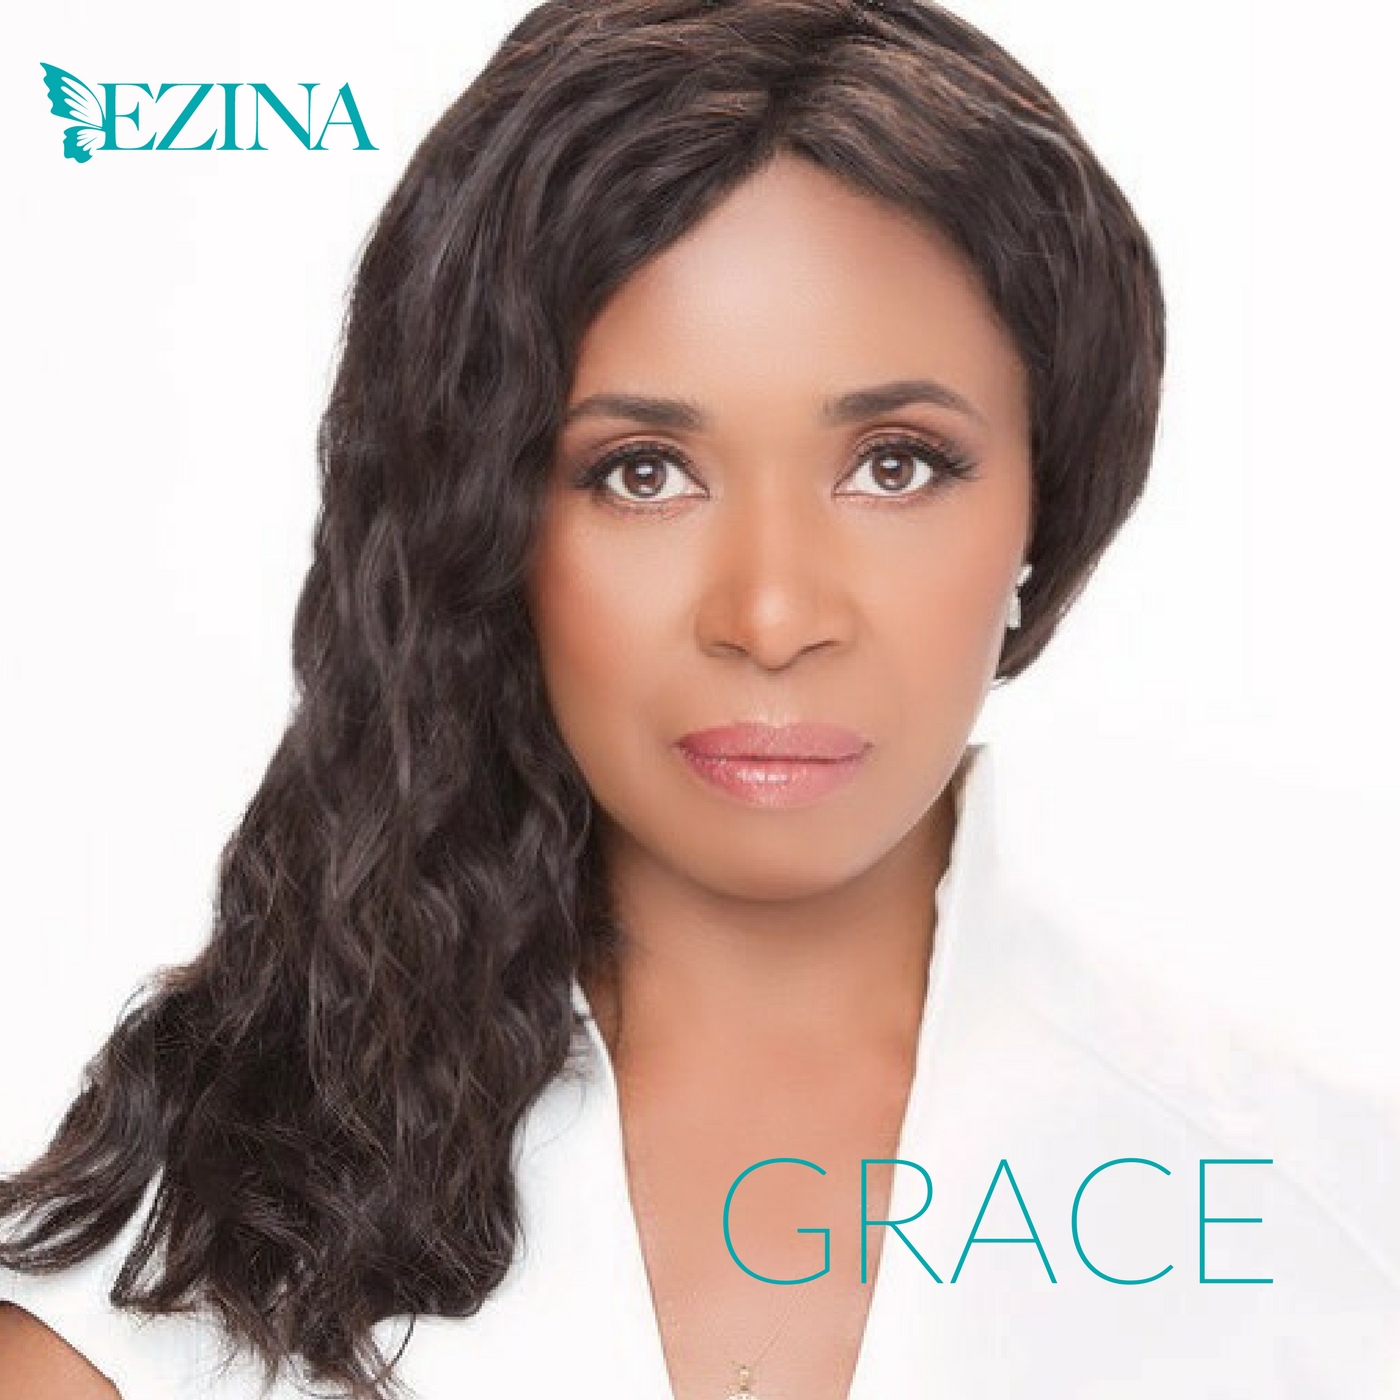 Grace album by Ezina